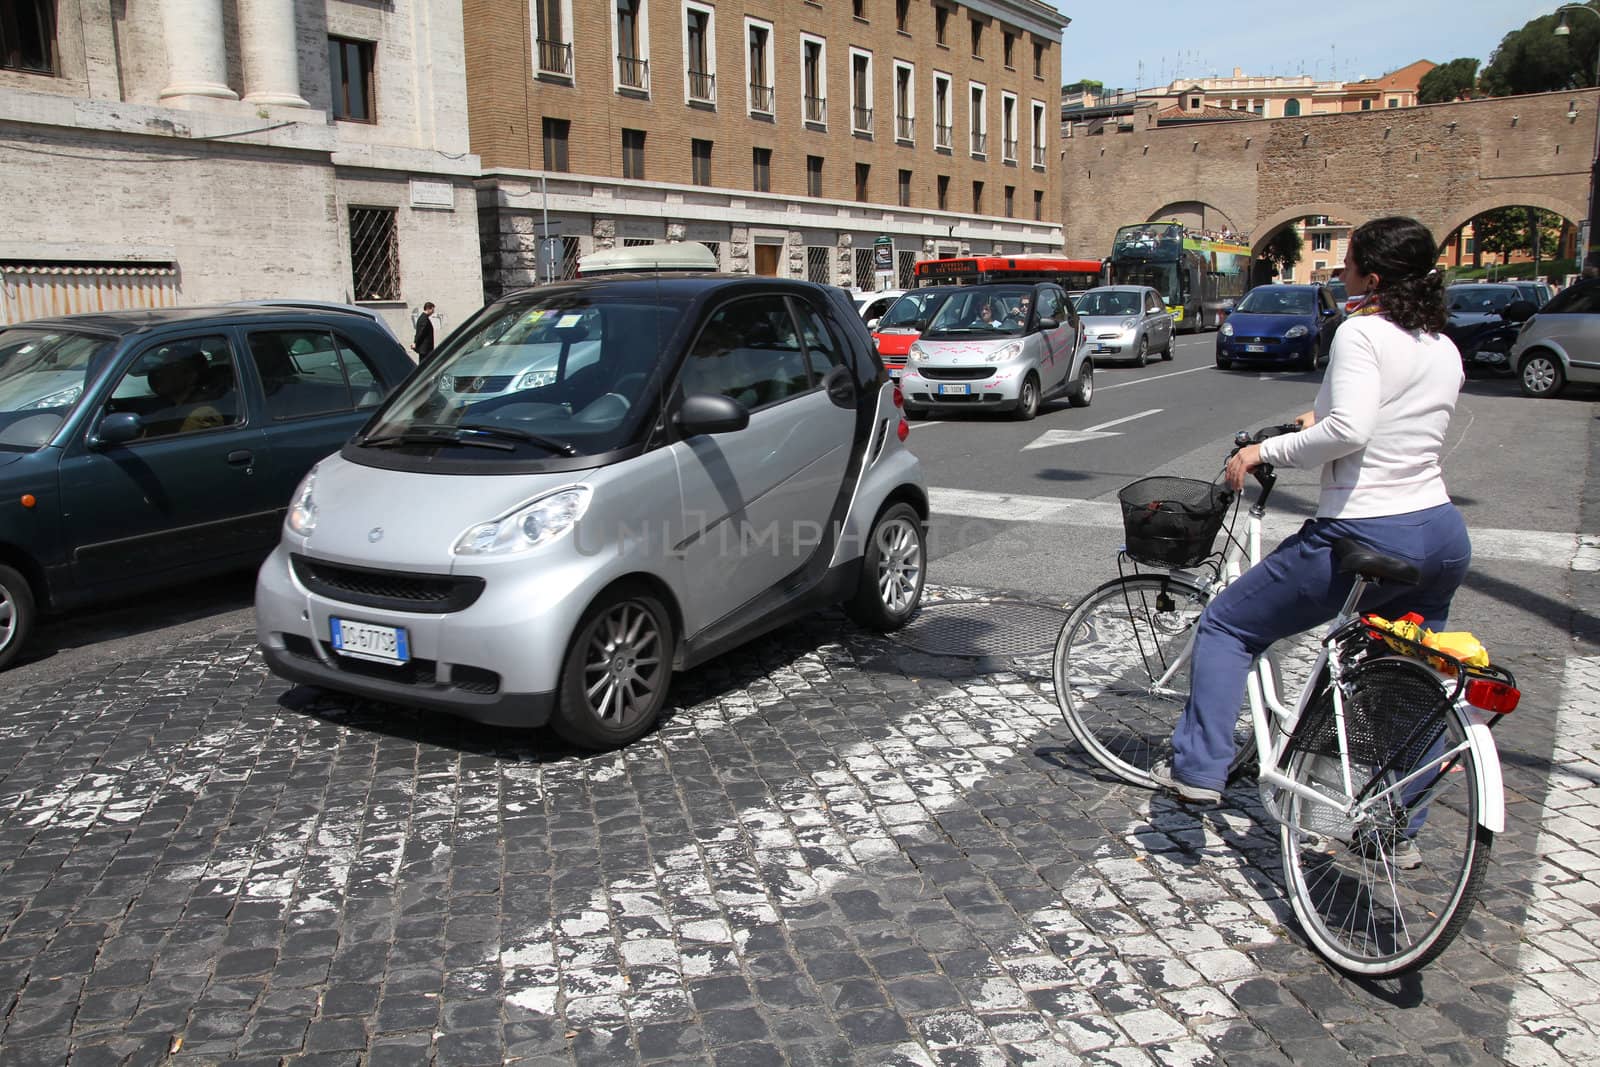 Cyclist in Rome by tupungato